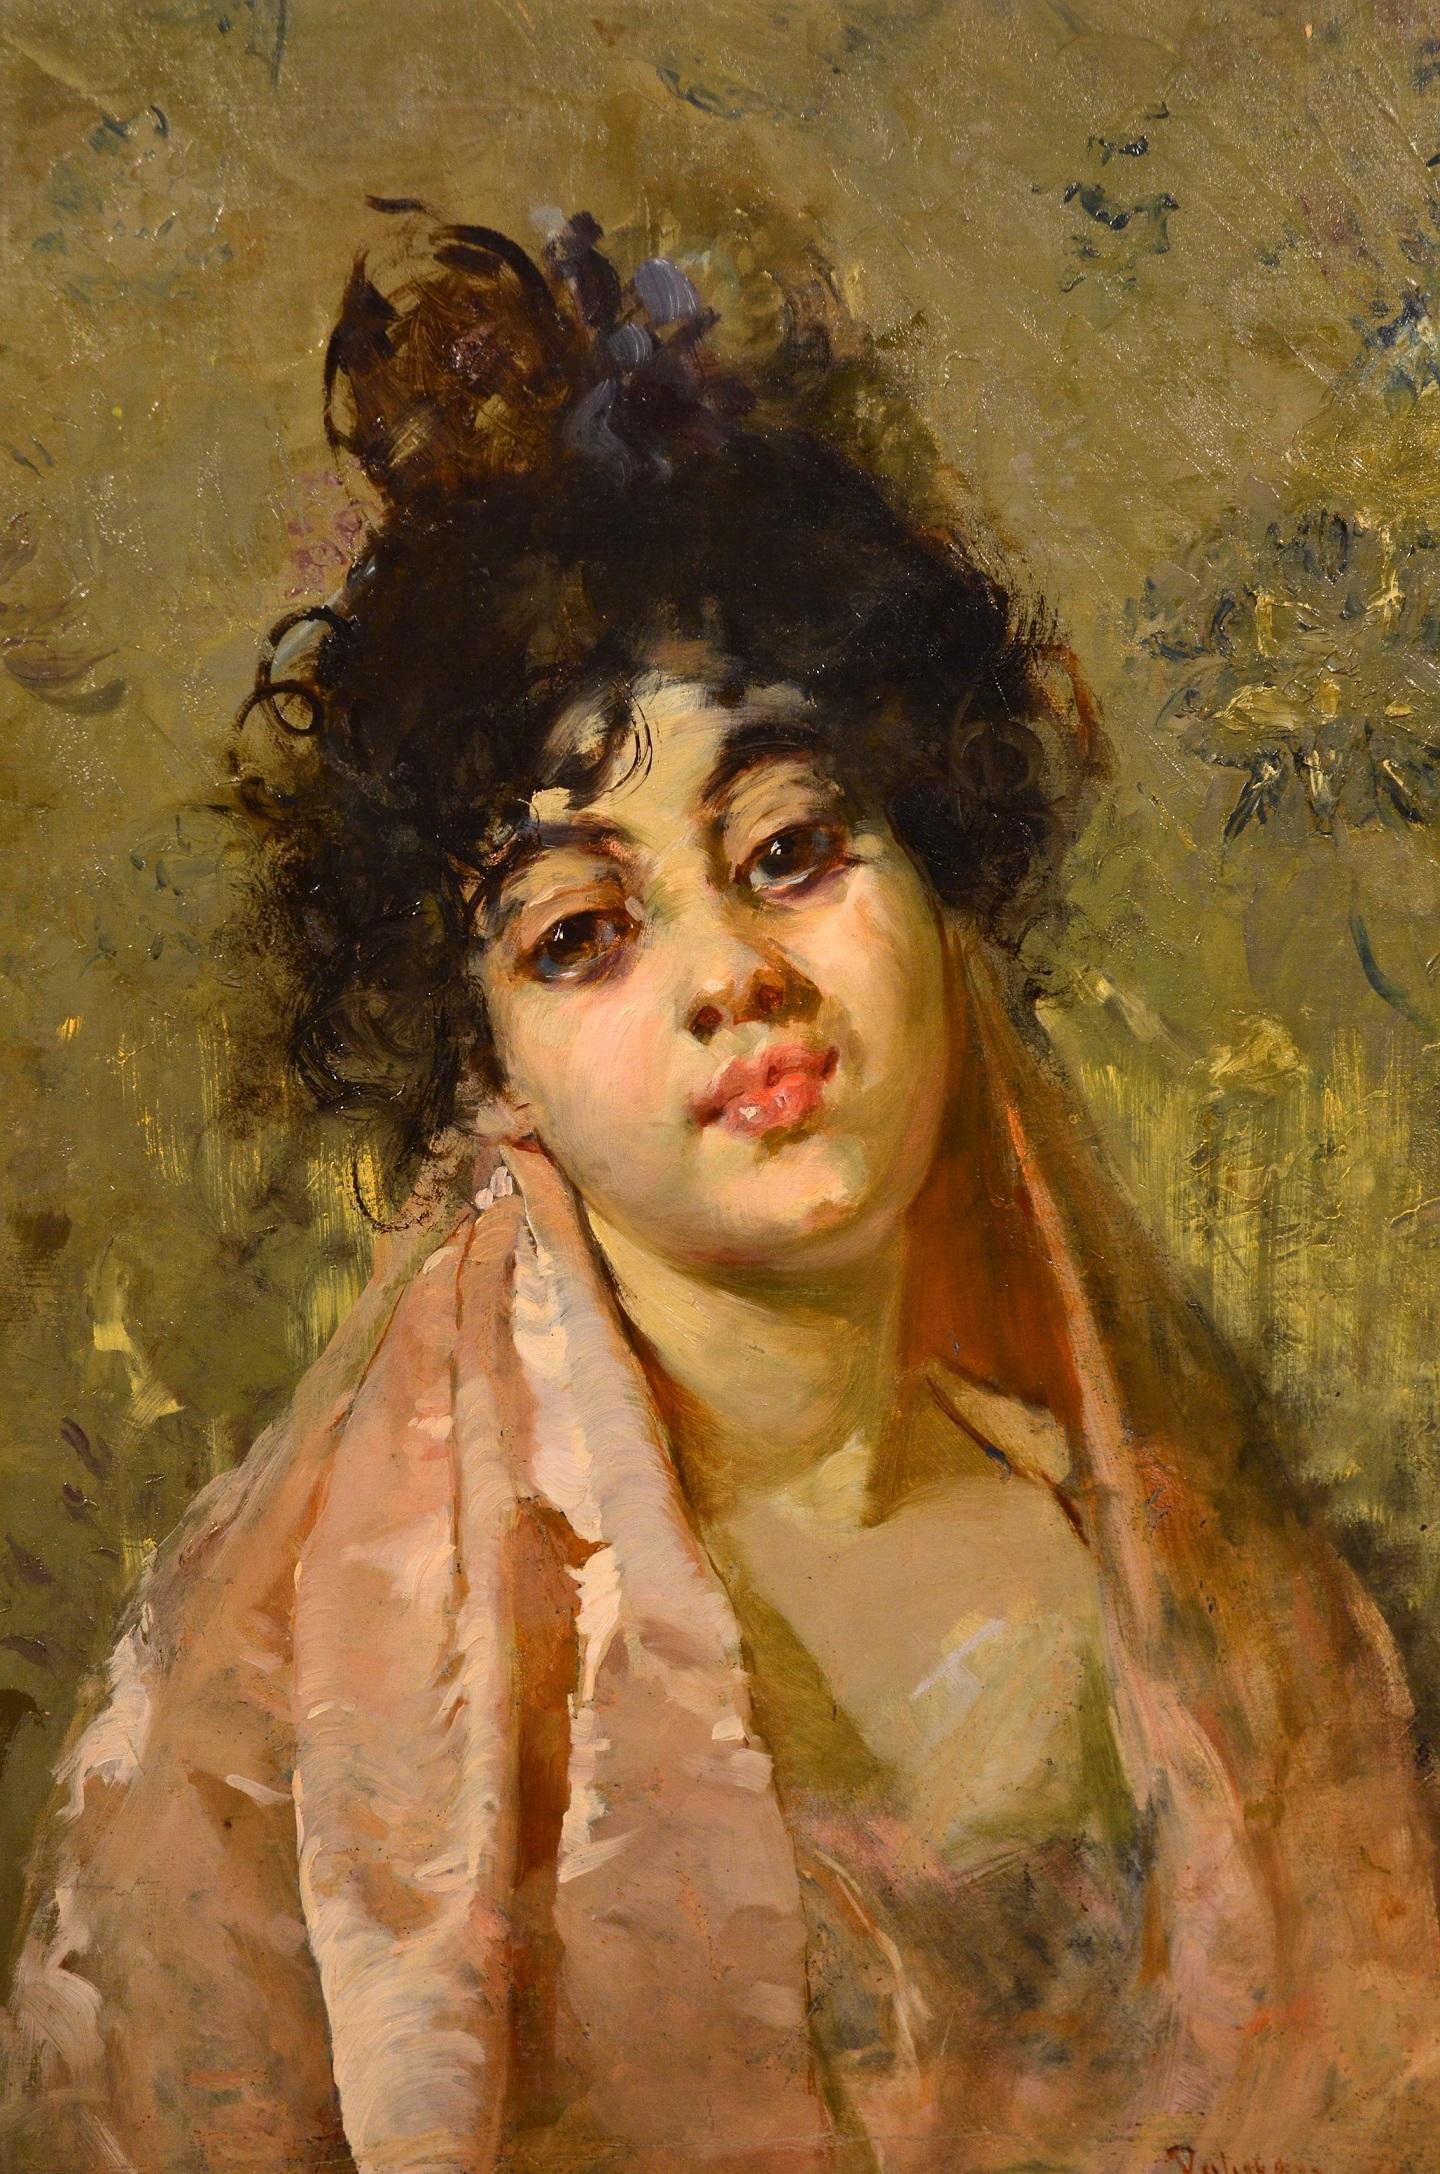 Salvatore Postiglione) Paint Oil on canvas Signed Portrait Woman Impressionism - Impressionist Painting by Postiglione Salvatore (Naples 1861 - 1906)